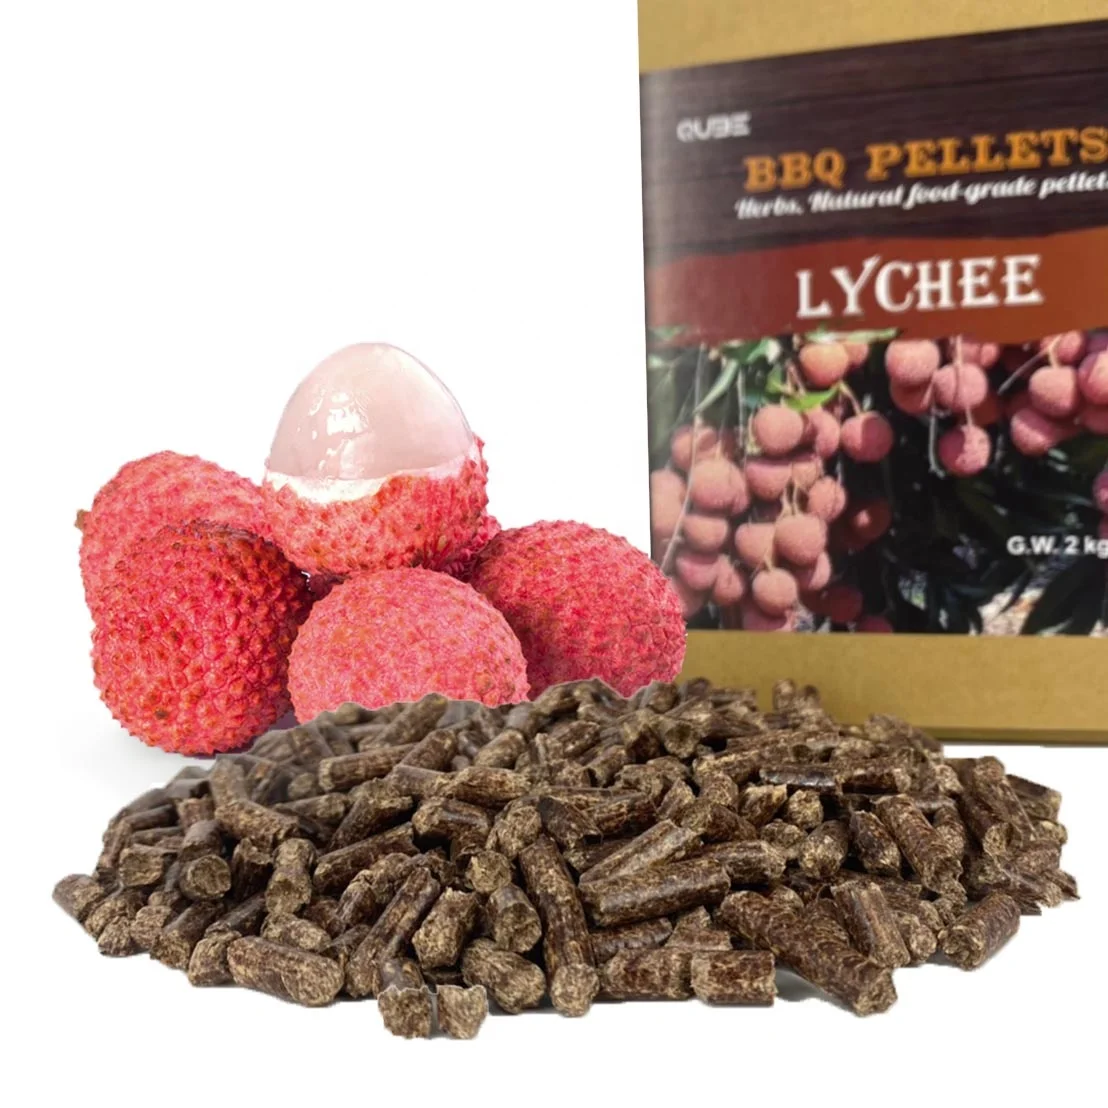 
Best lychee smoking hickory wood pellets bronze pellets  (10000000825589)